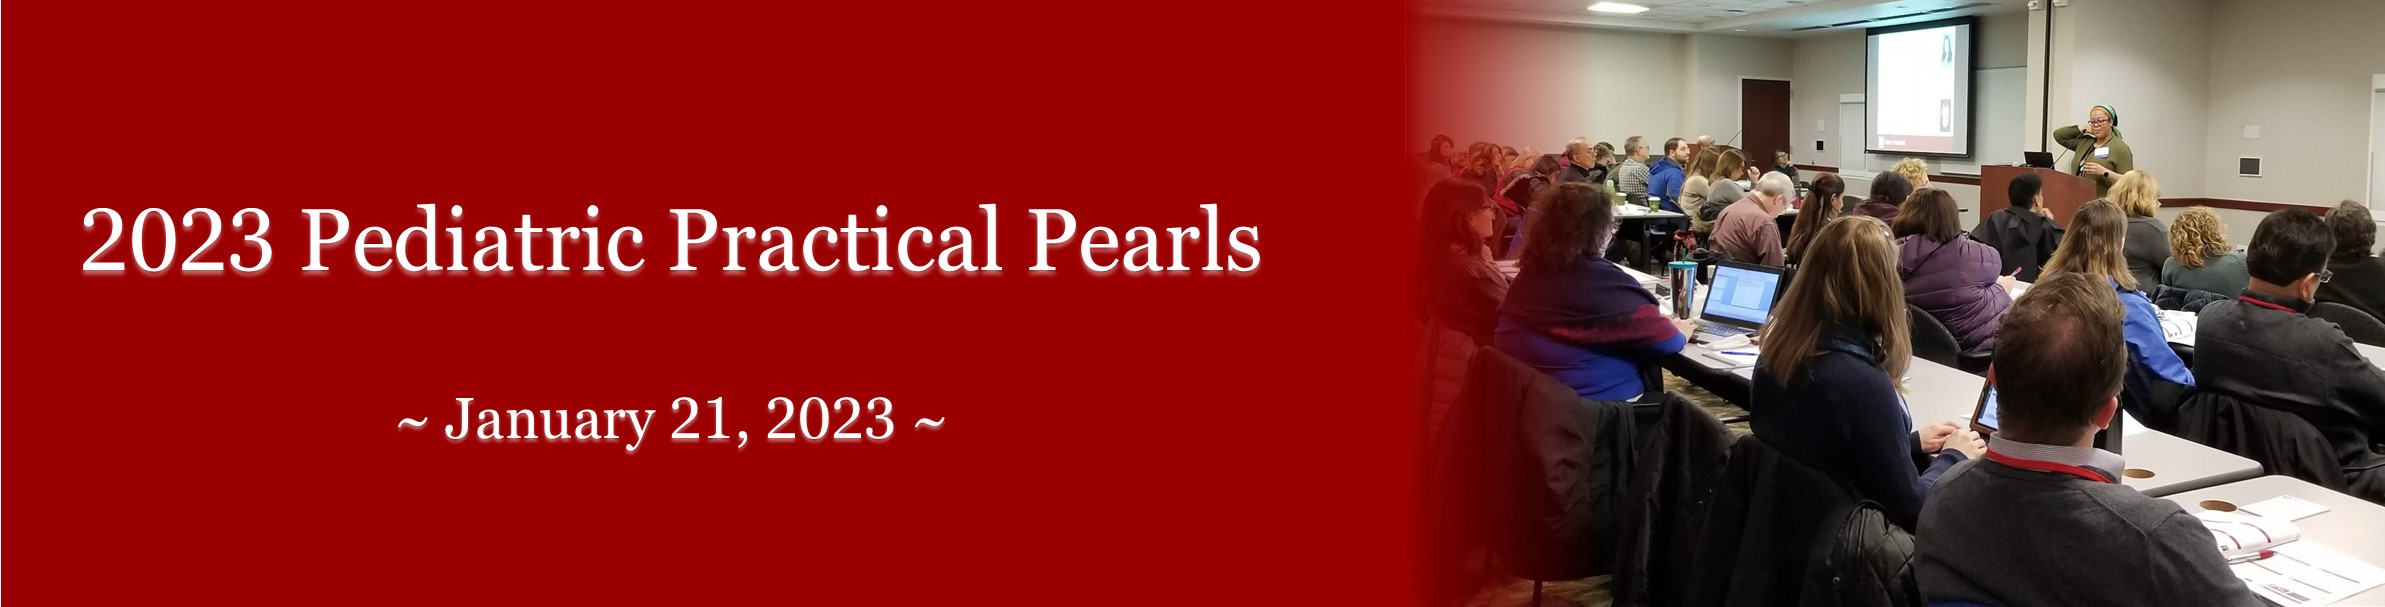 January 2023 Pediatric Practical Pearls Banner